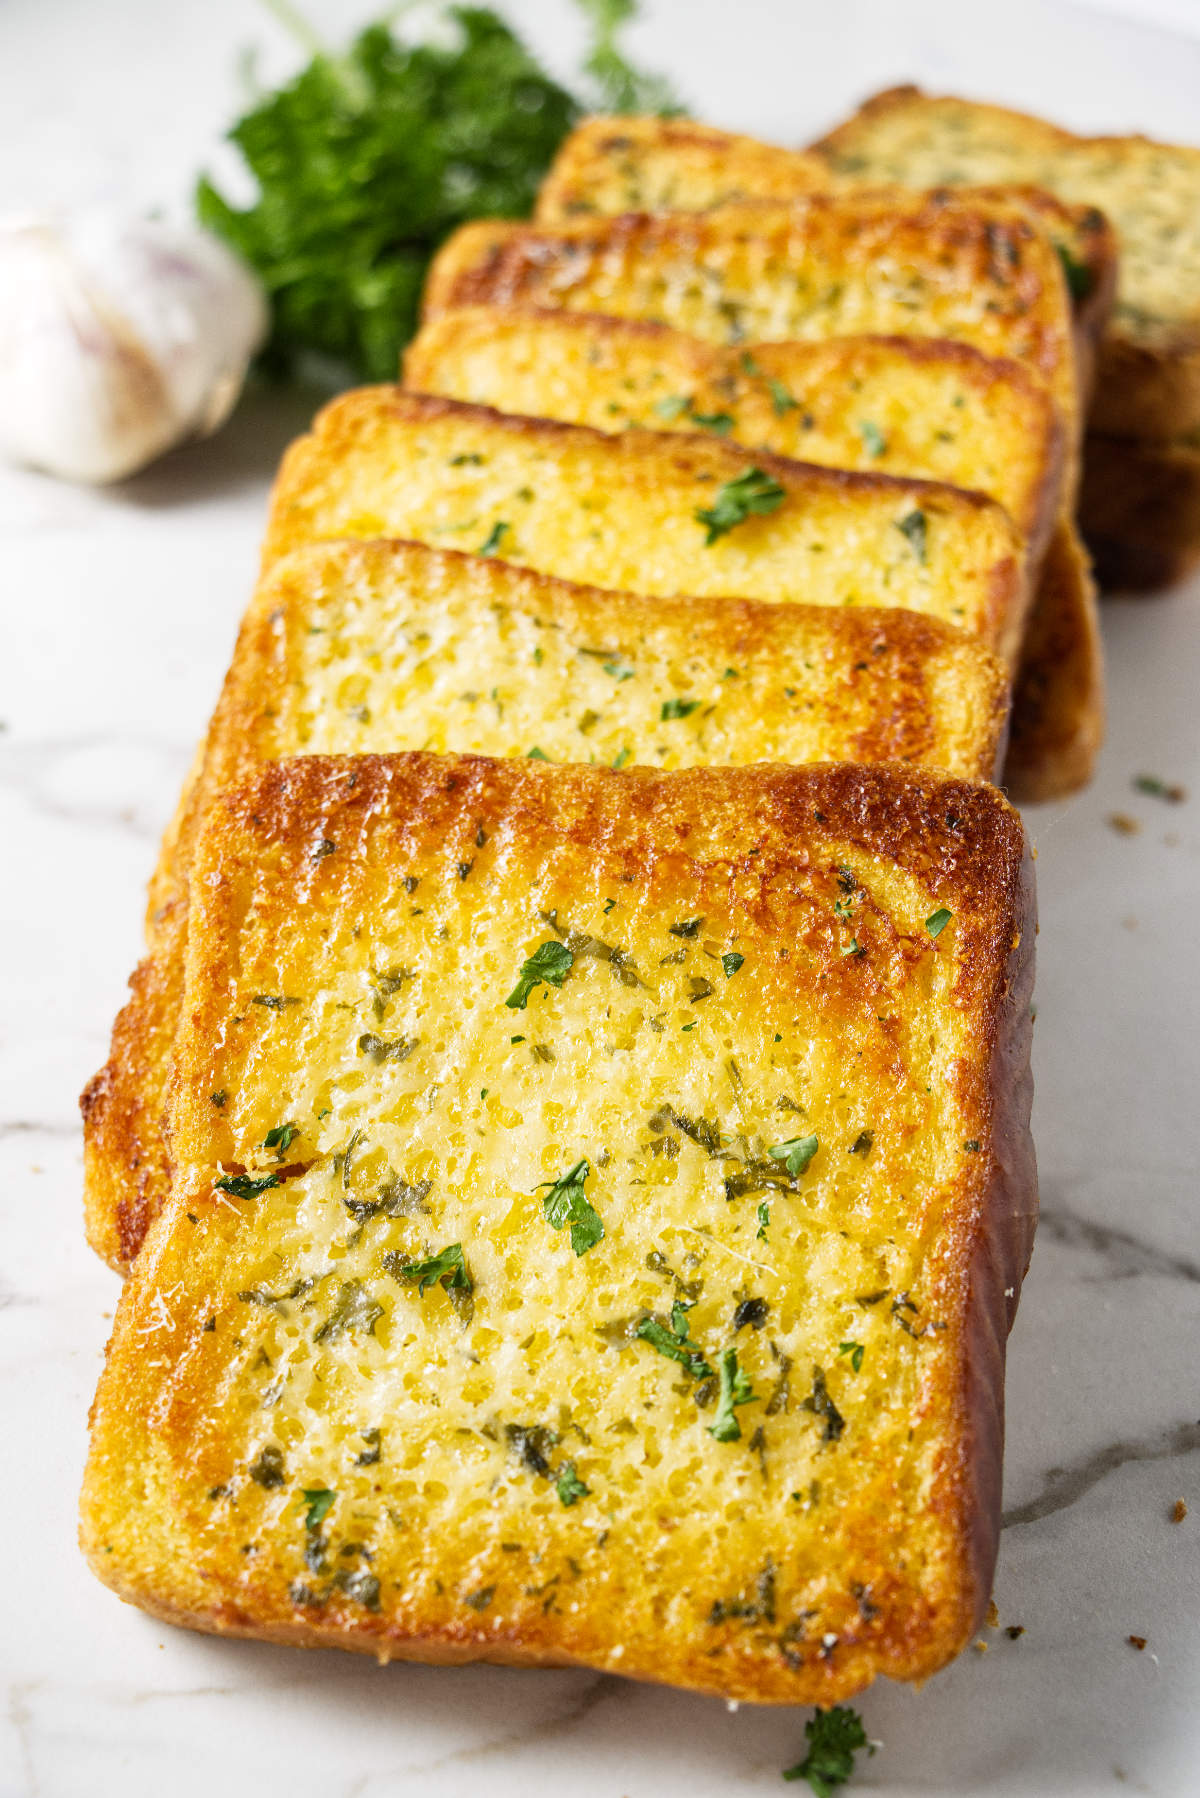 https://savorthebest.com/wp-content/uploads/2022/10/texas-toast-garlic-bread_3292.jpg